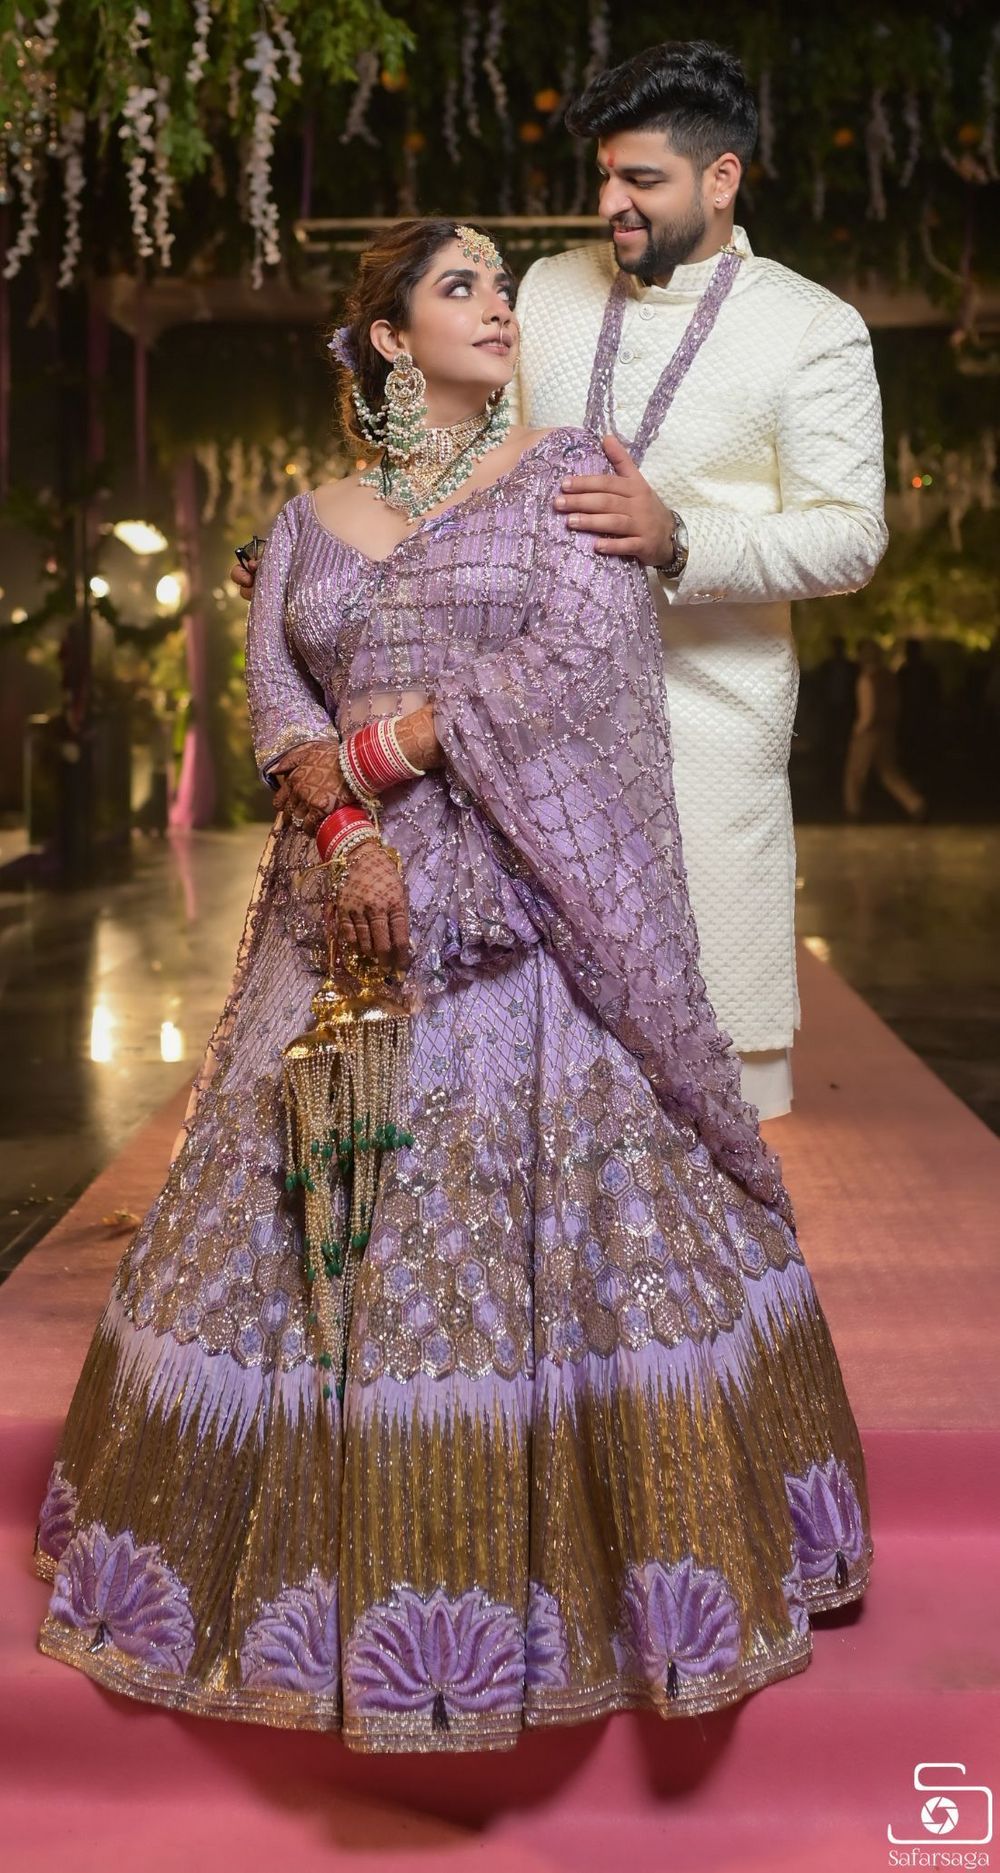 Photo From Sahil Narang and Tanya Patni - Wedding shoot - safarsaga films - By Safarsaga Films